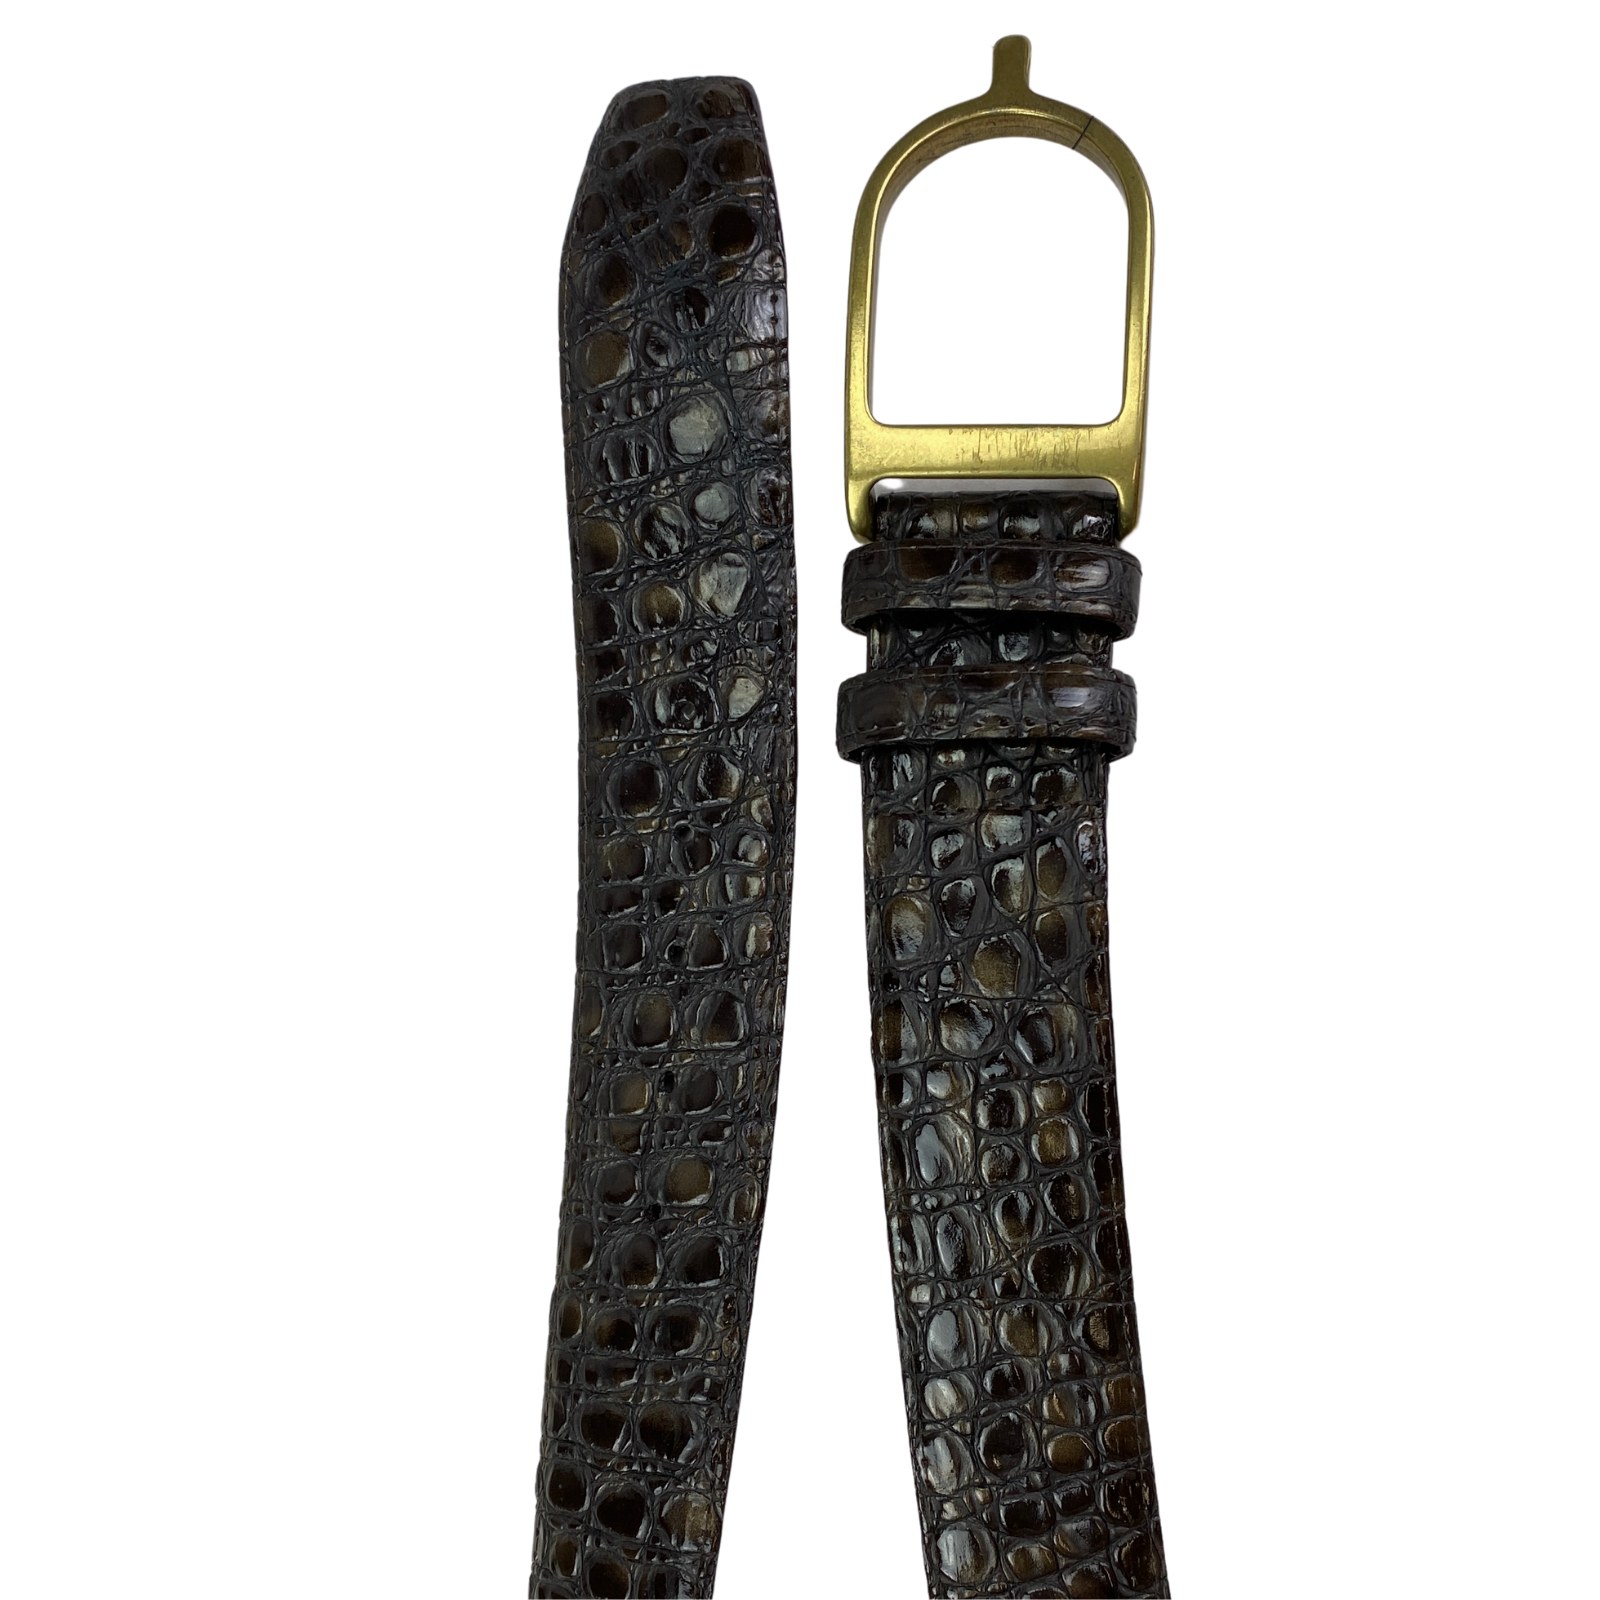 Sandy Duftler Designs Spur Belt in Brown Crocodile - Women's S/M